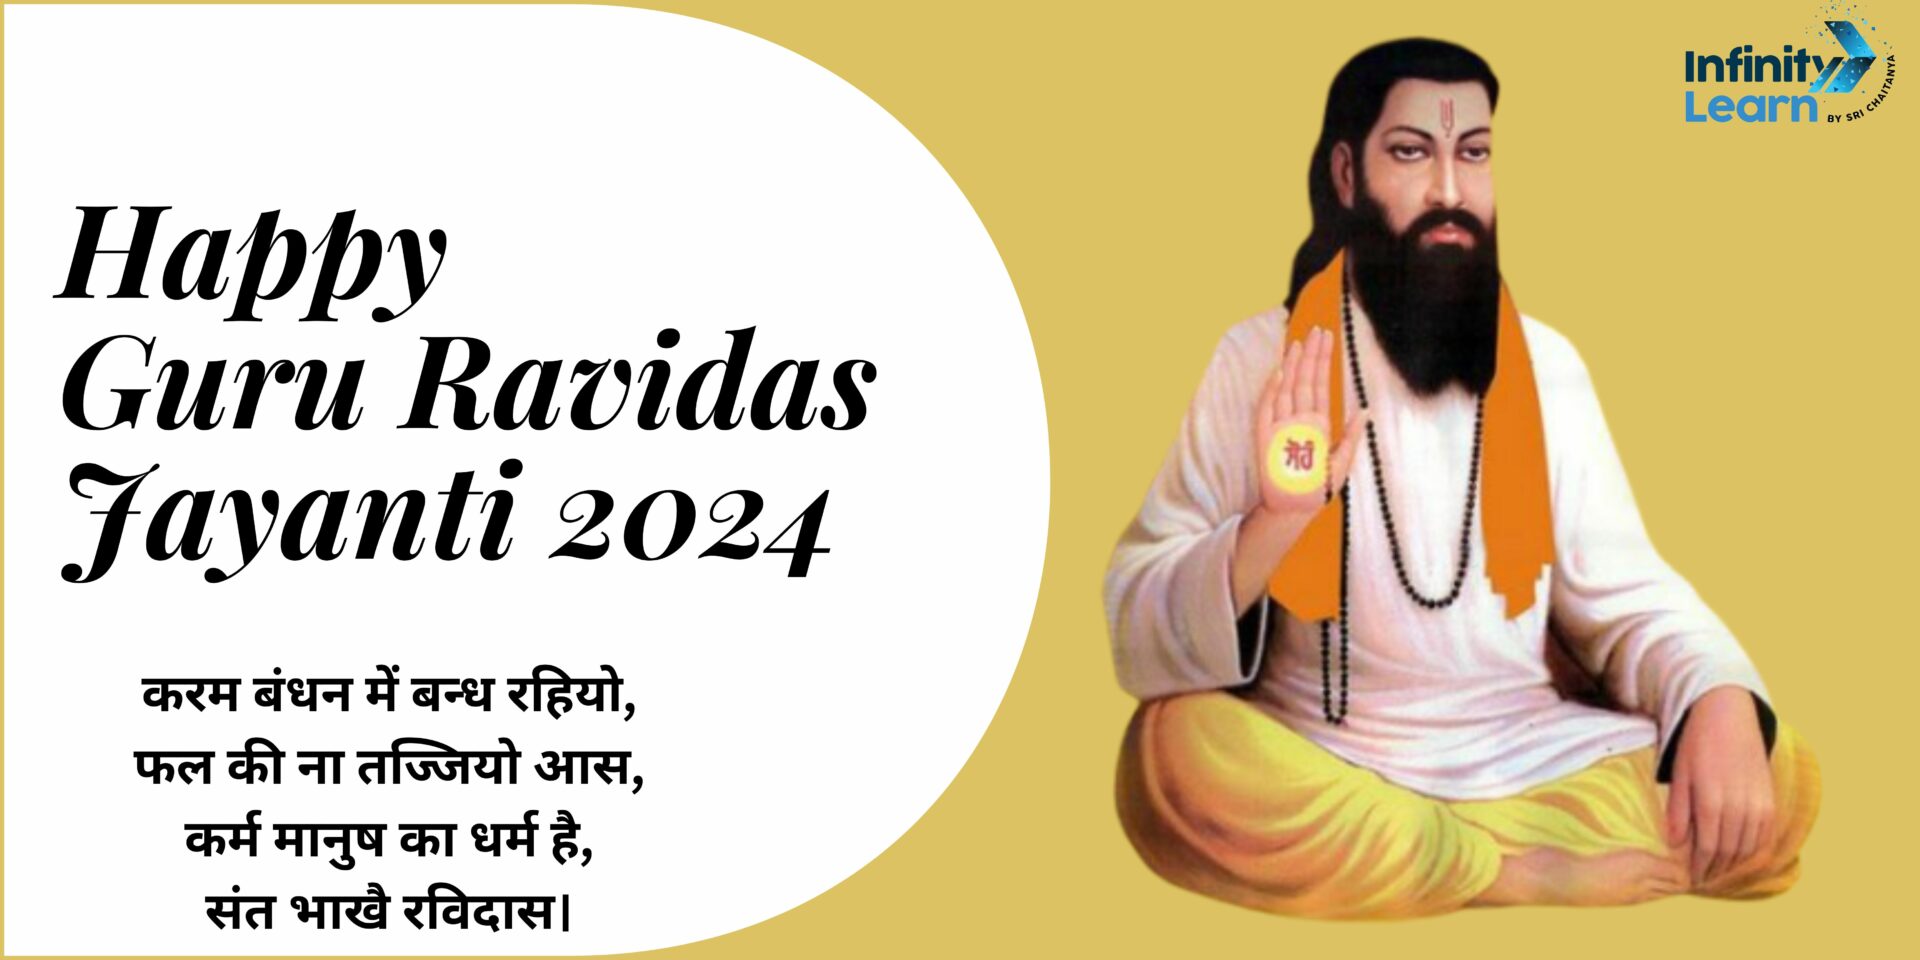 Sant Ravidas jayanti 2024